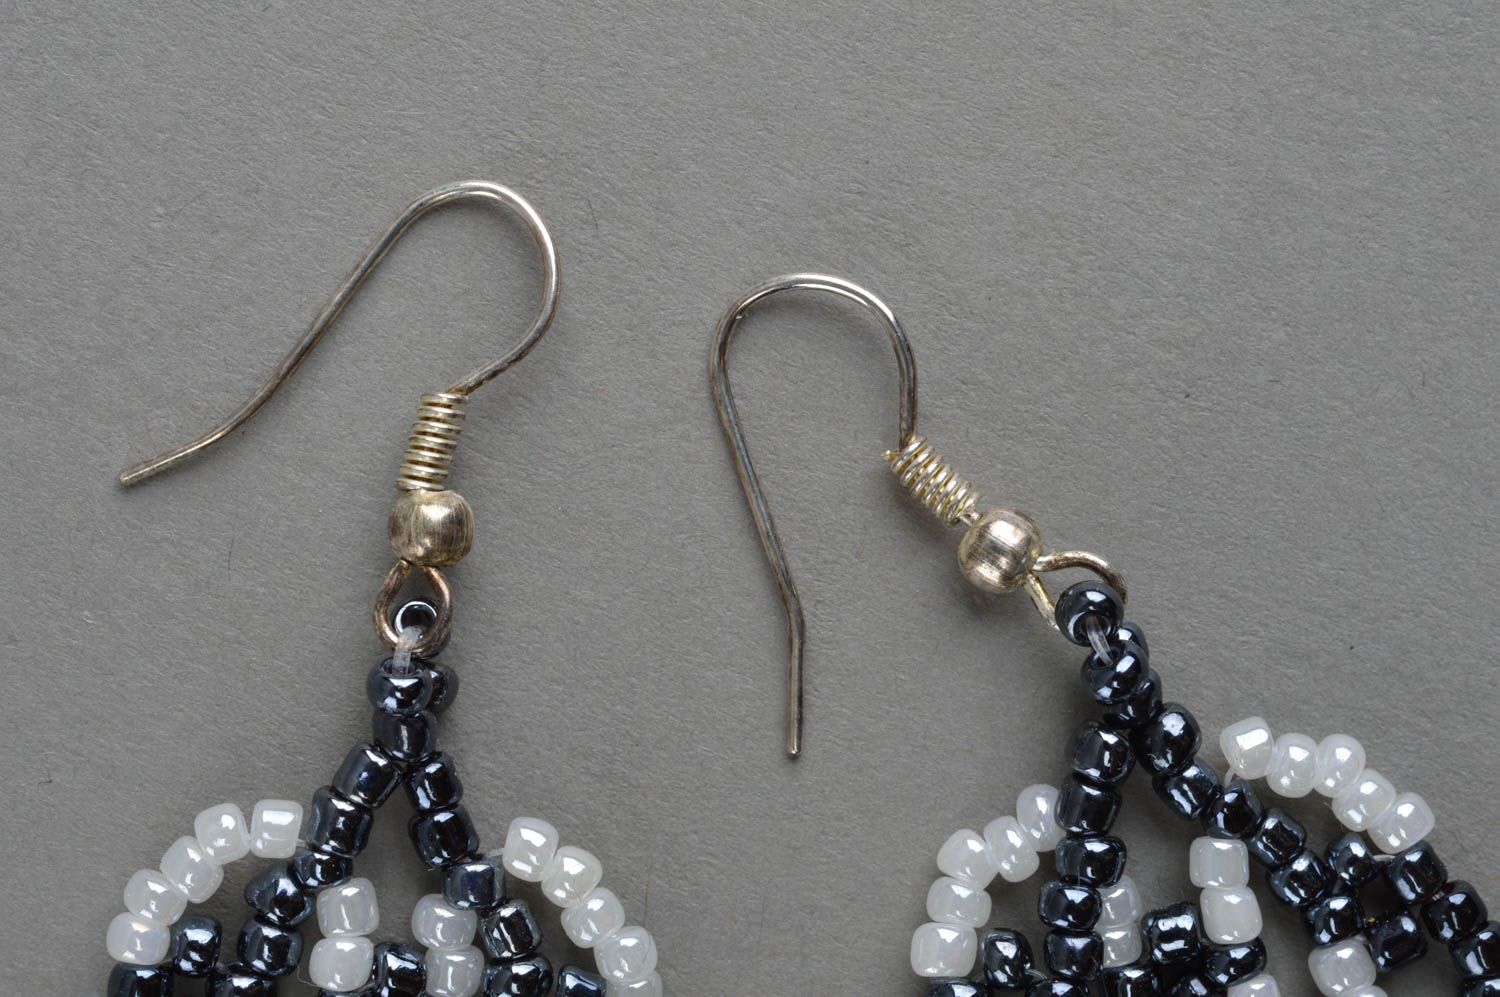 Large handmade beaded earrings beautiful jewellery bead weaving ideas photo 4